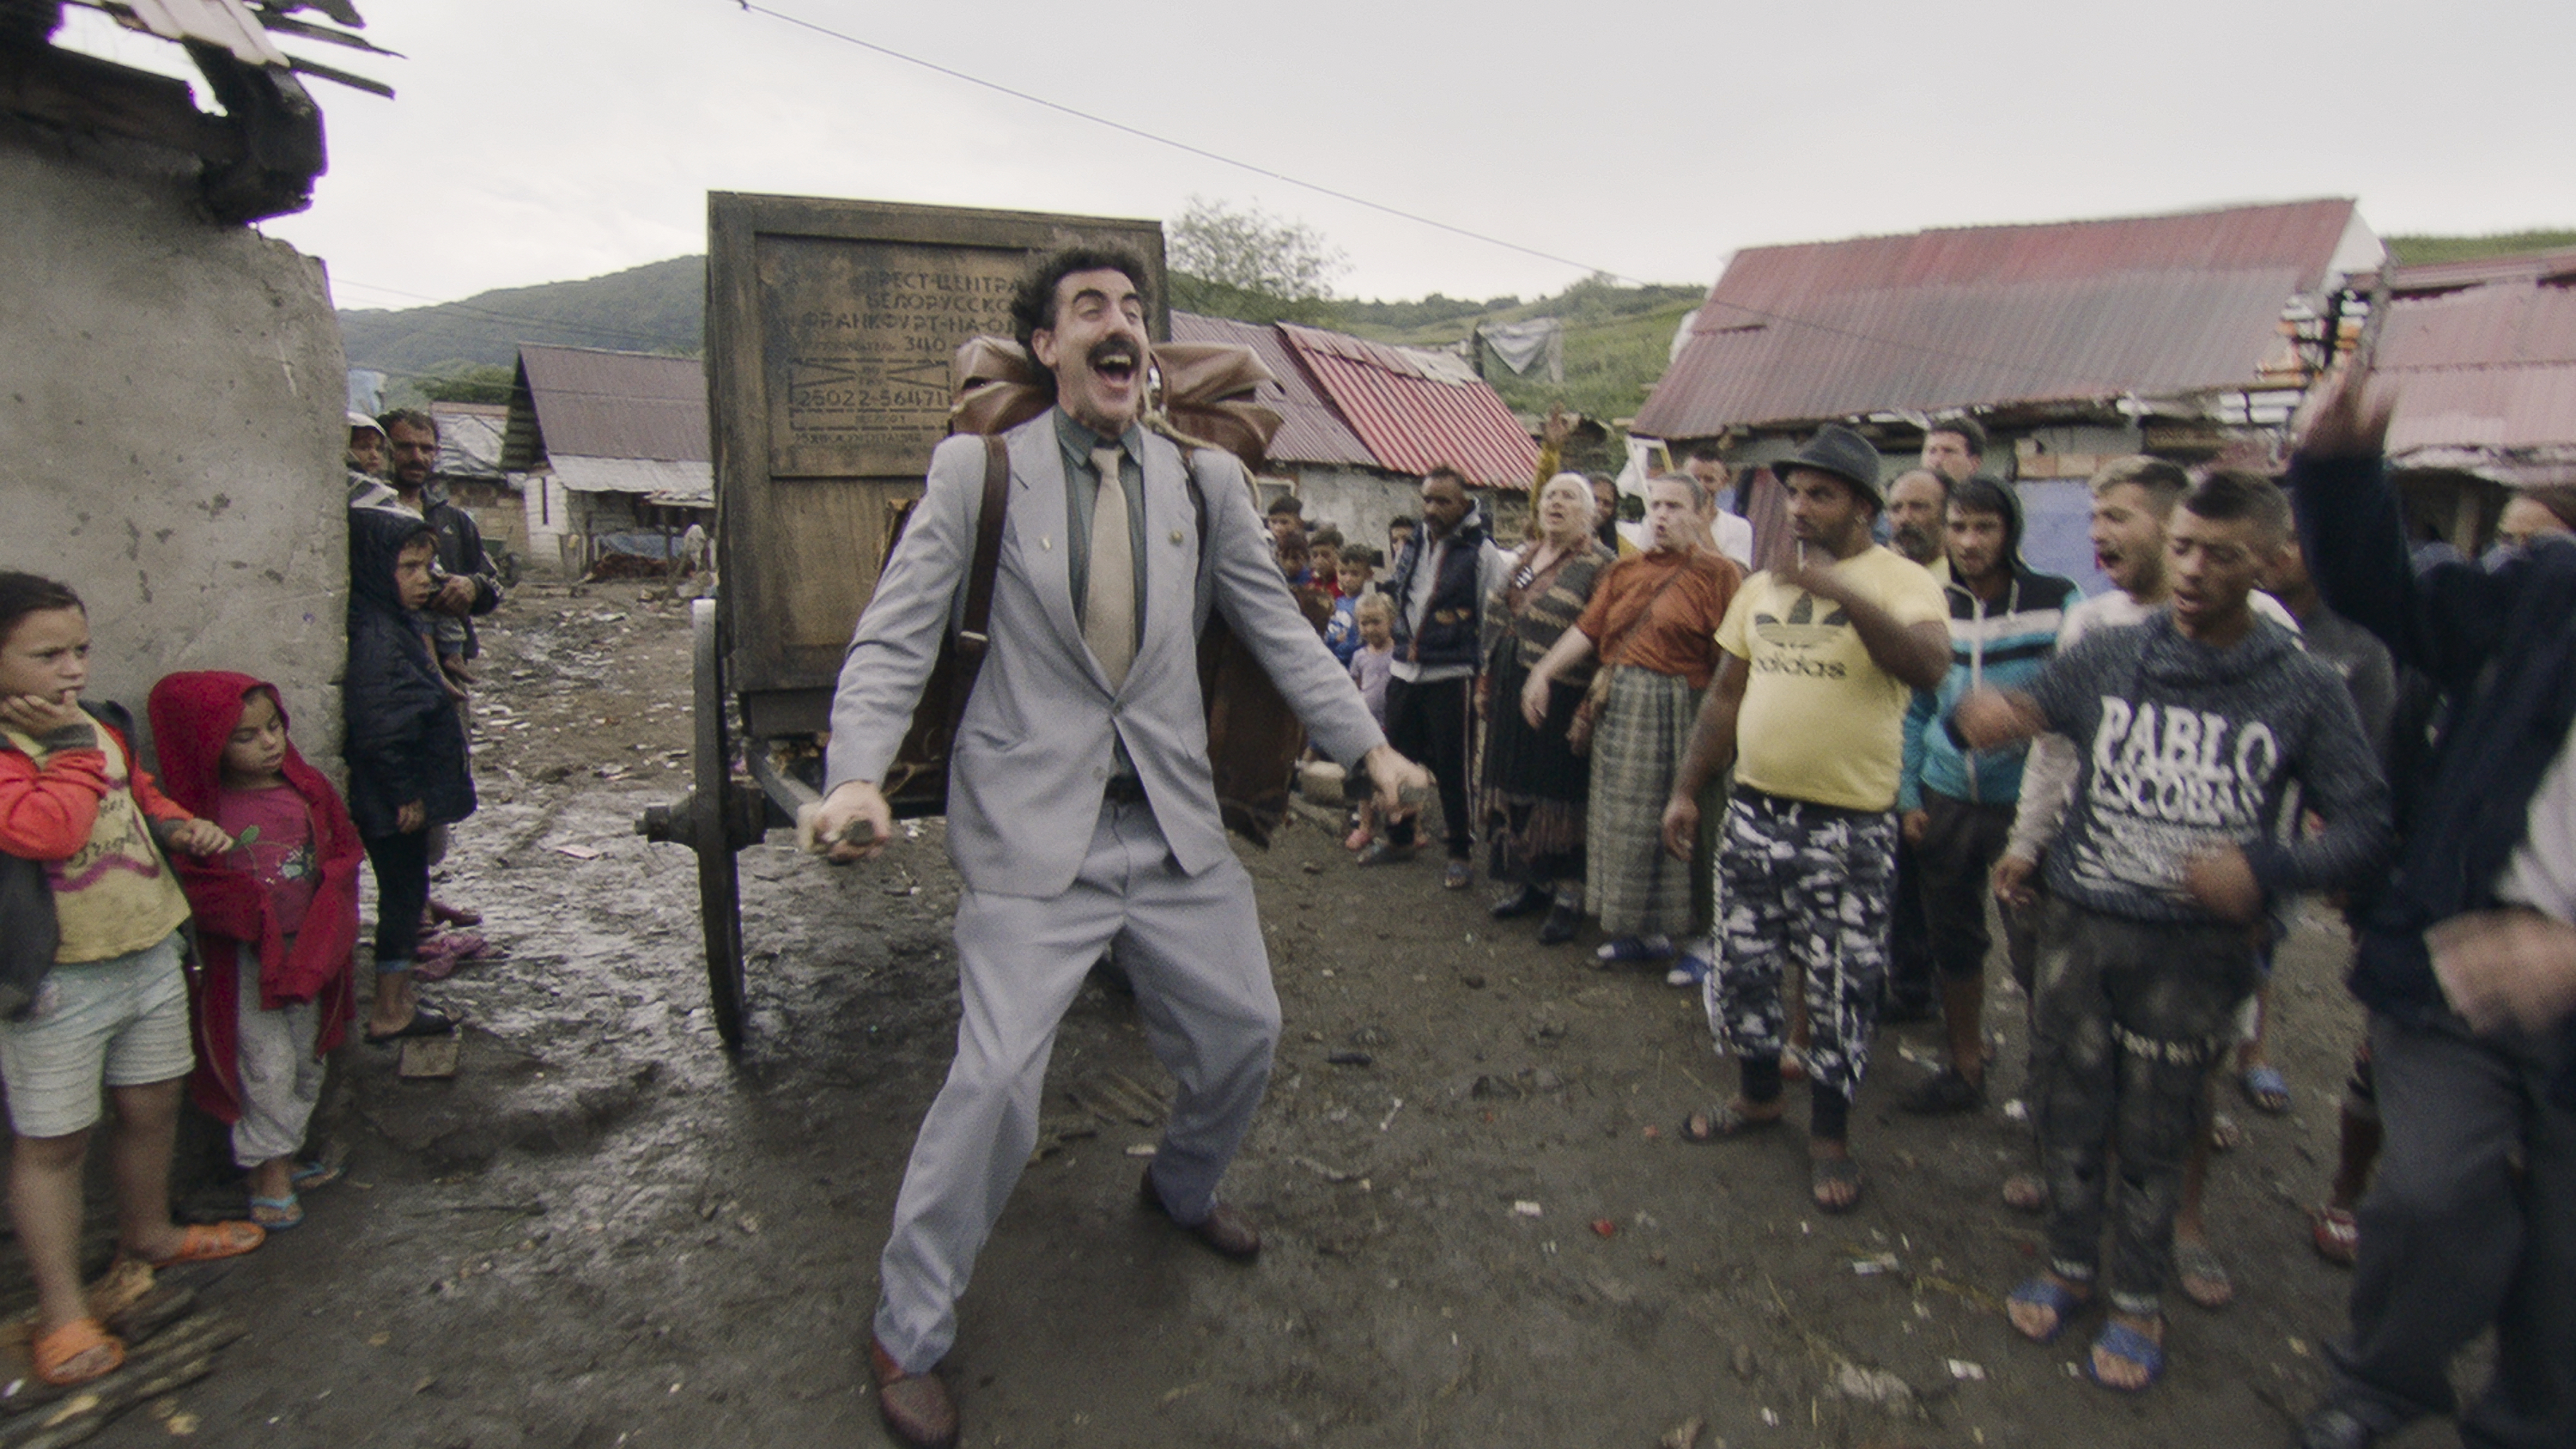 Borat Subsequent Moviefilm Courtesy of Amazon Studios